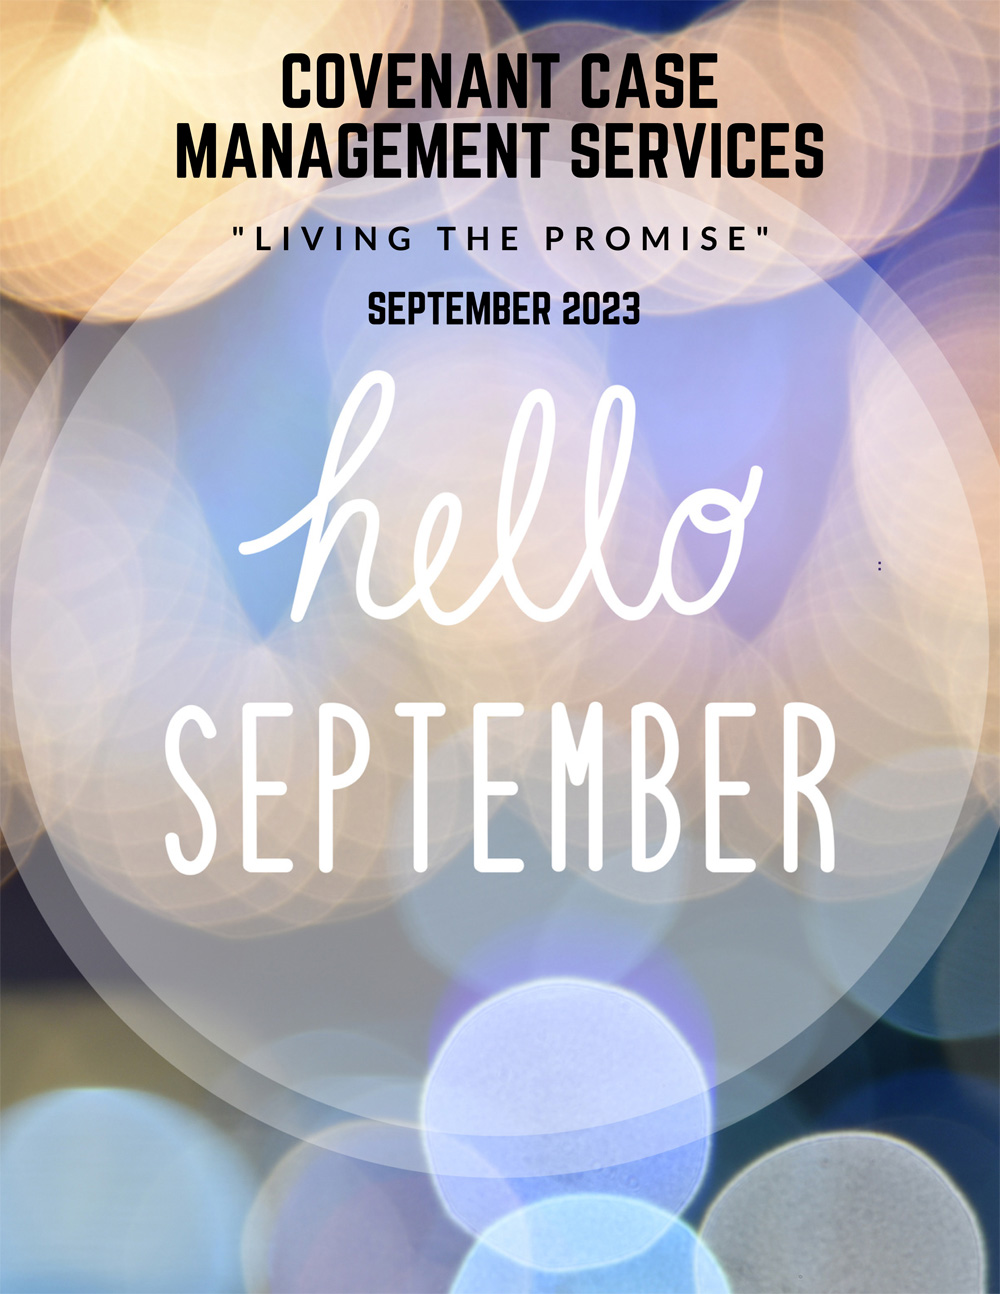 September 2023 Newsletter from Covenant Case Management Services